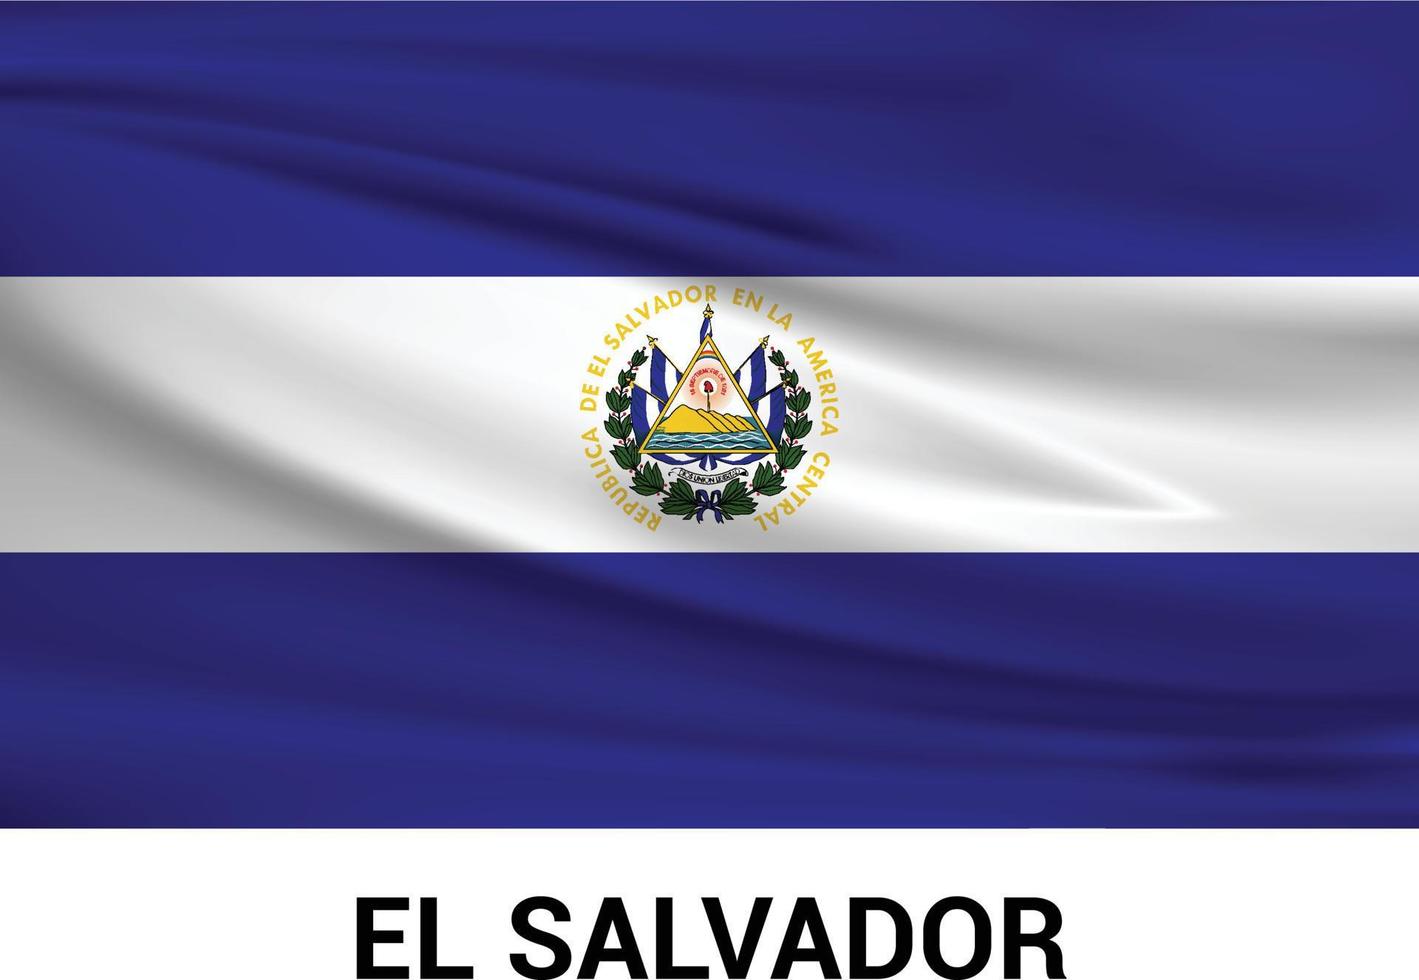 El Salvador flag design vector